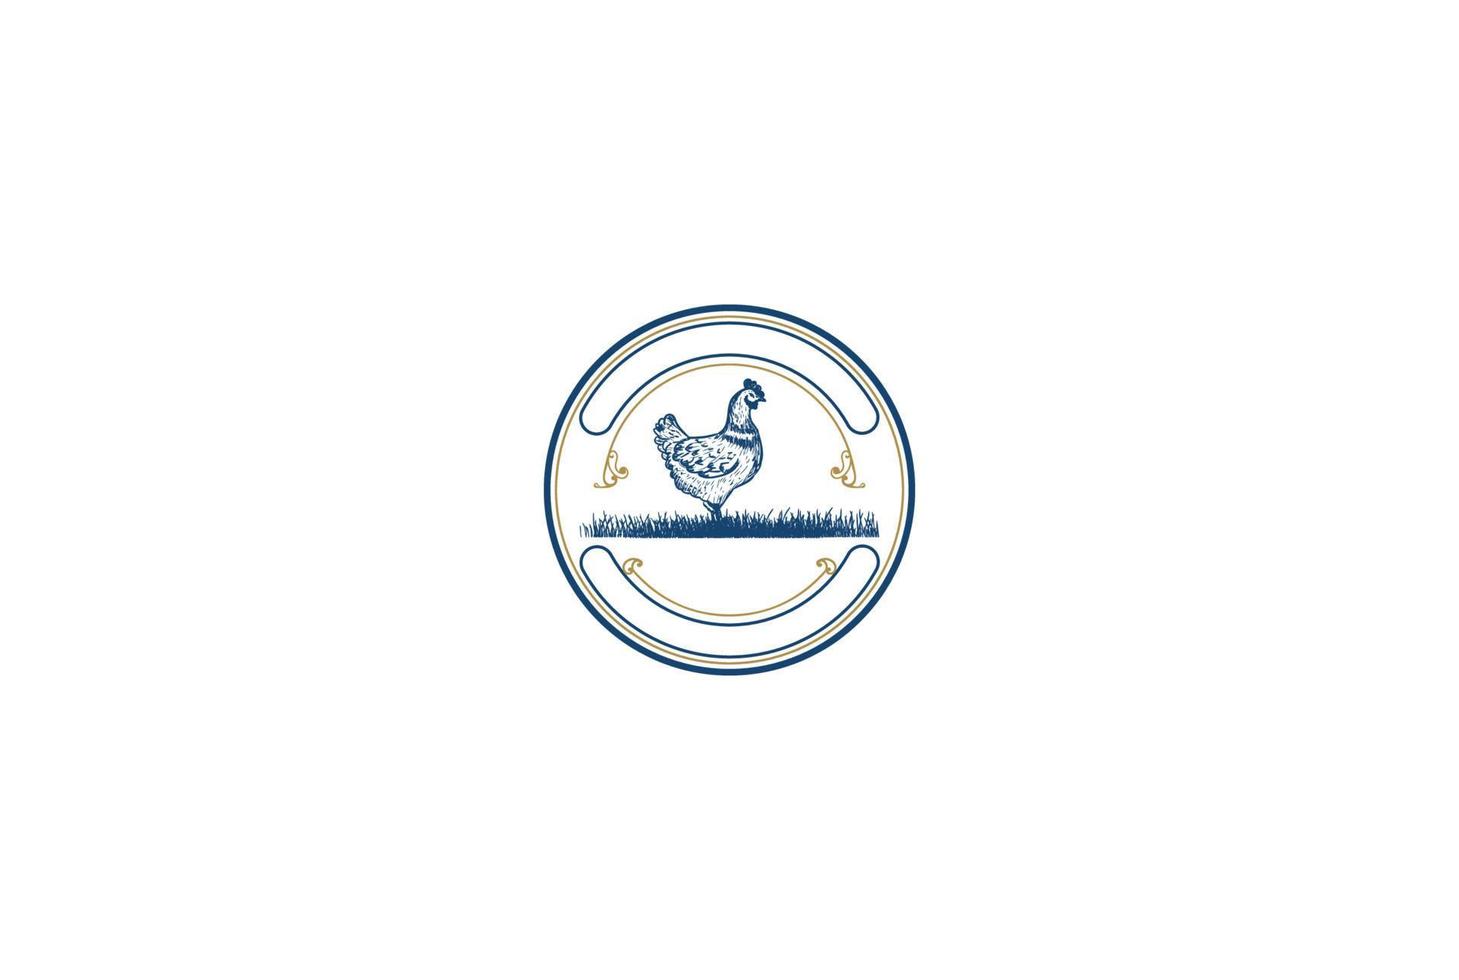 Retro-Vintage-Hühnerhuhn für Eierfarm-Logo-Design-Vektor vektor